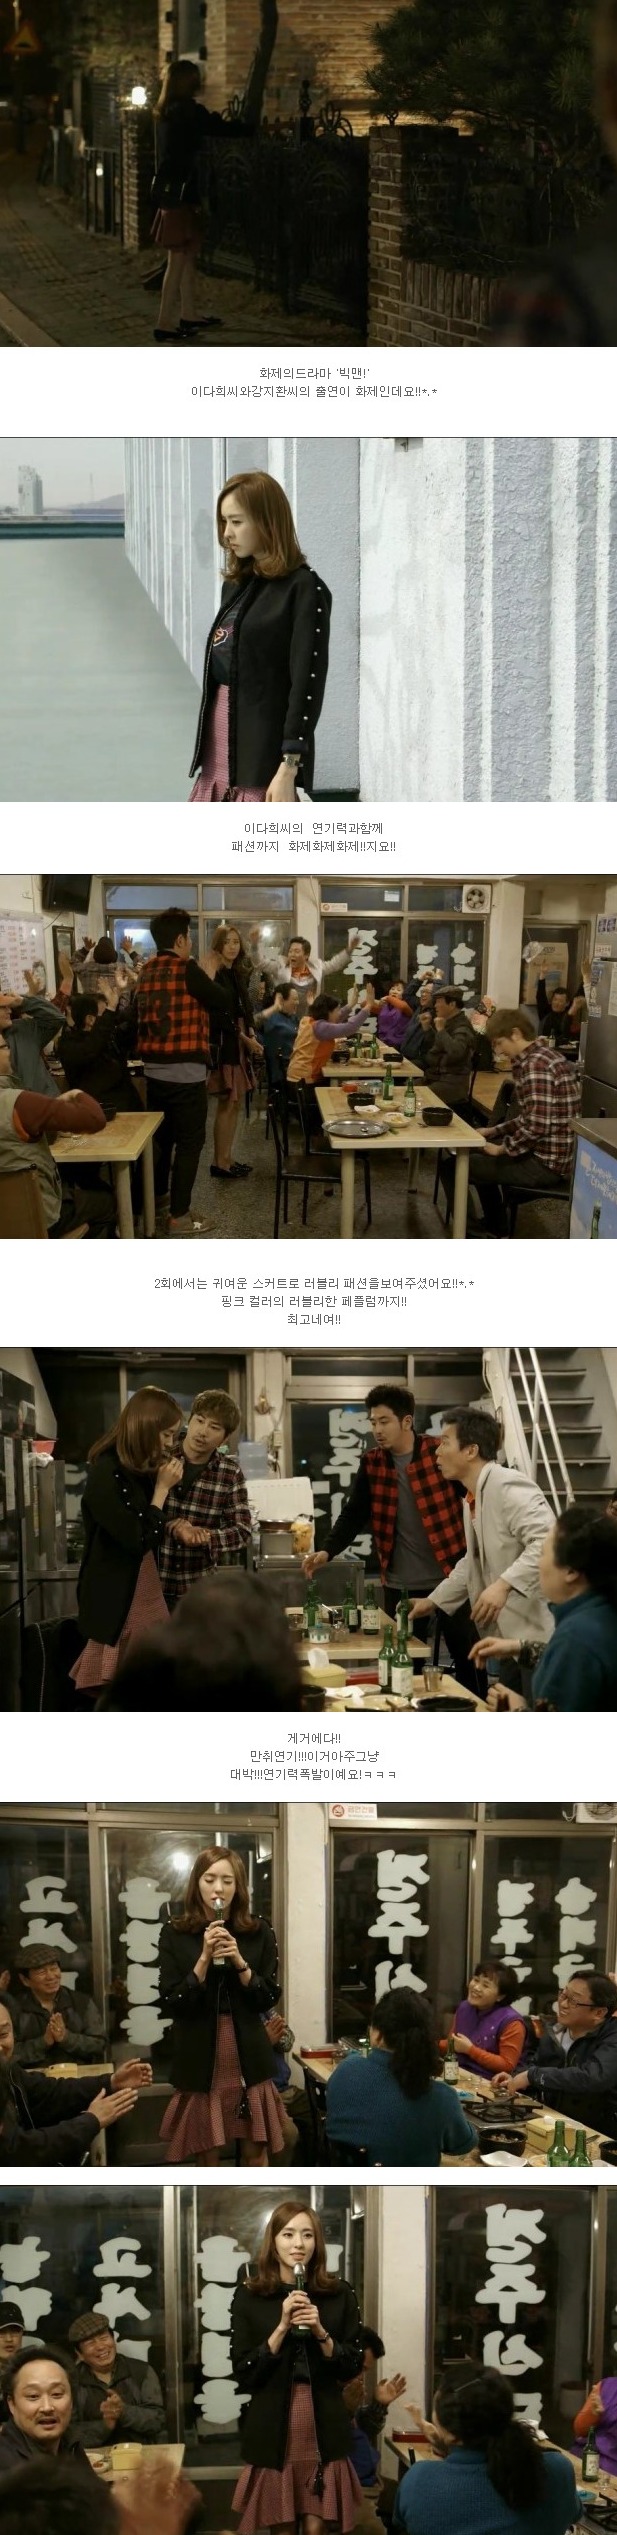 episode 2 captures for the Korean drama 'Big Man'